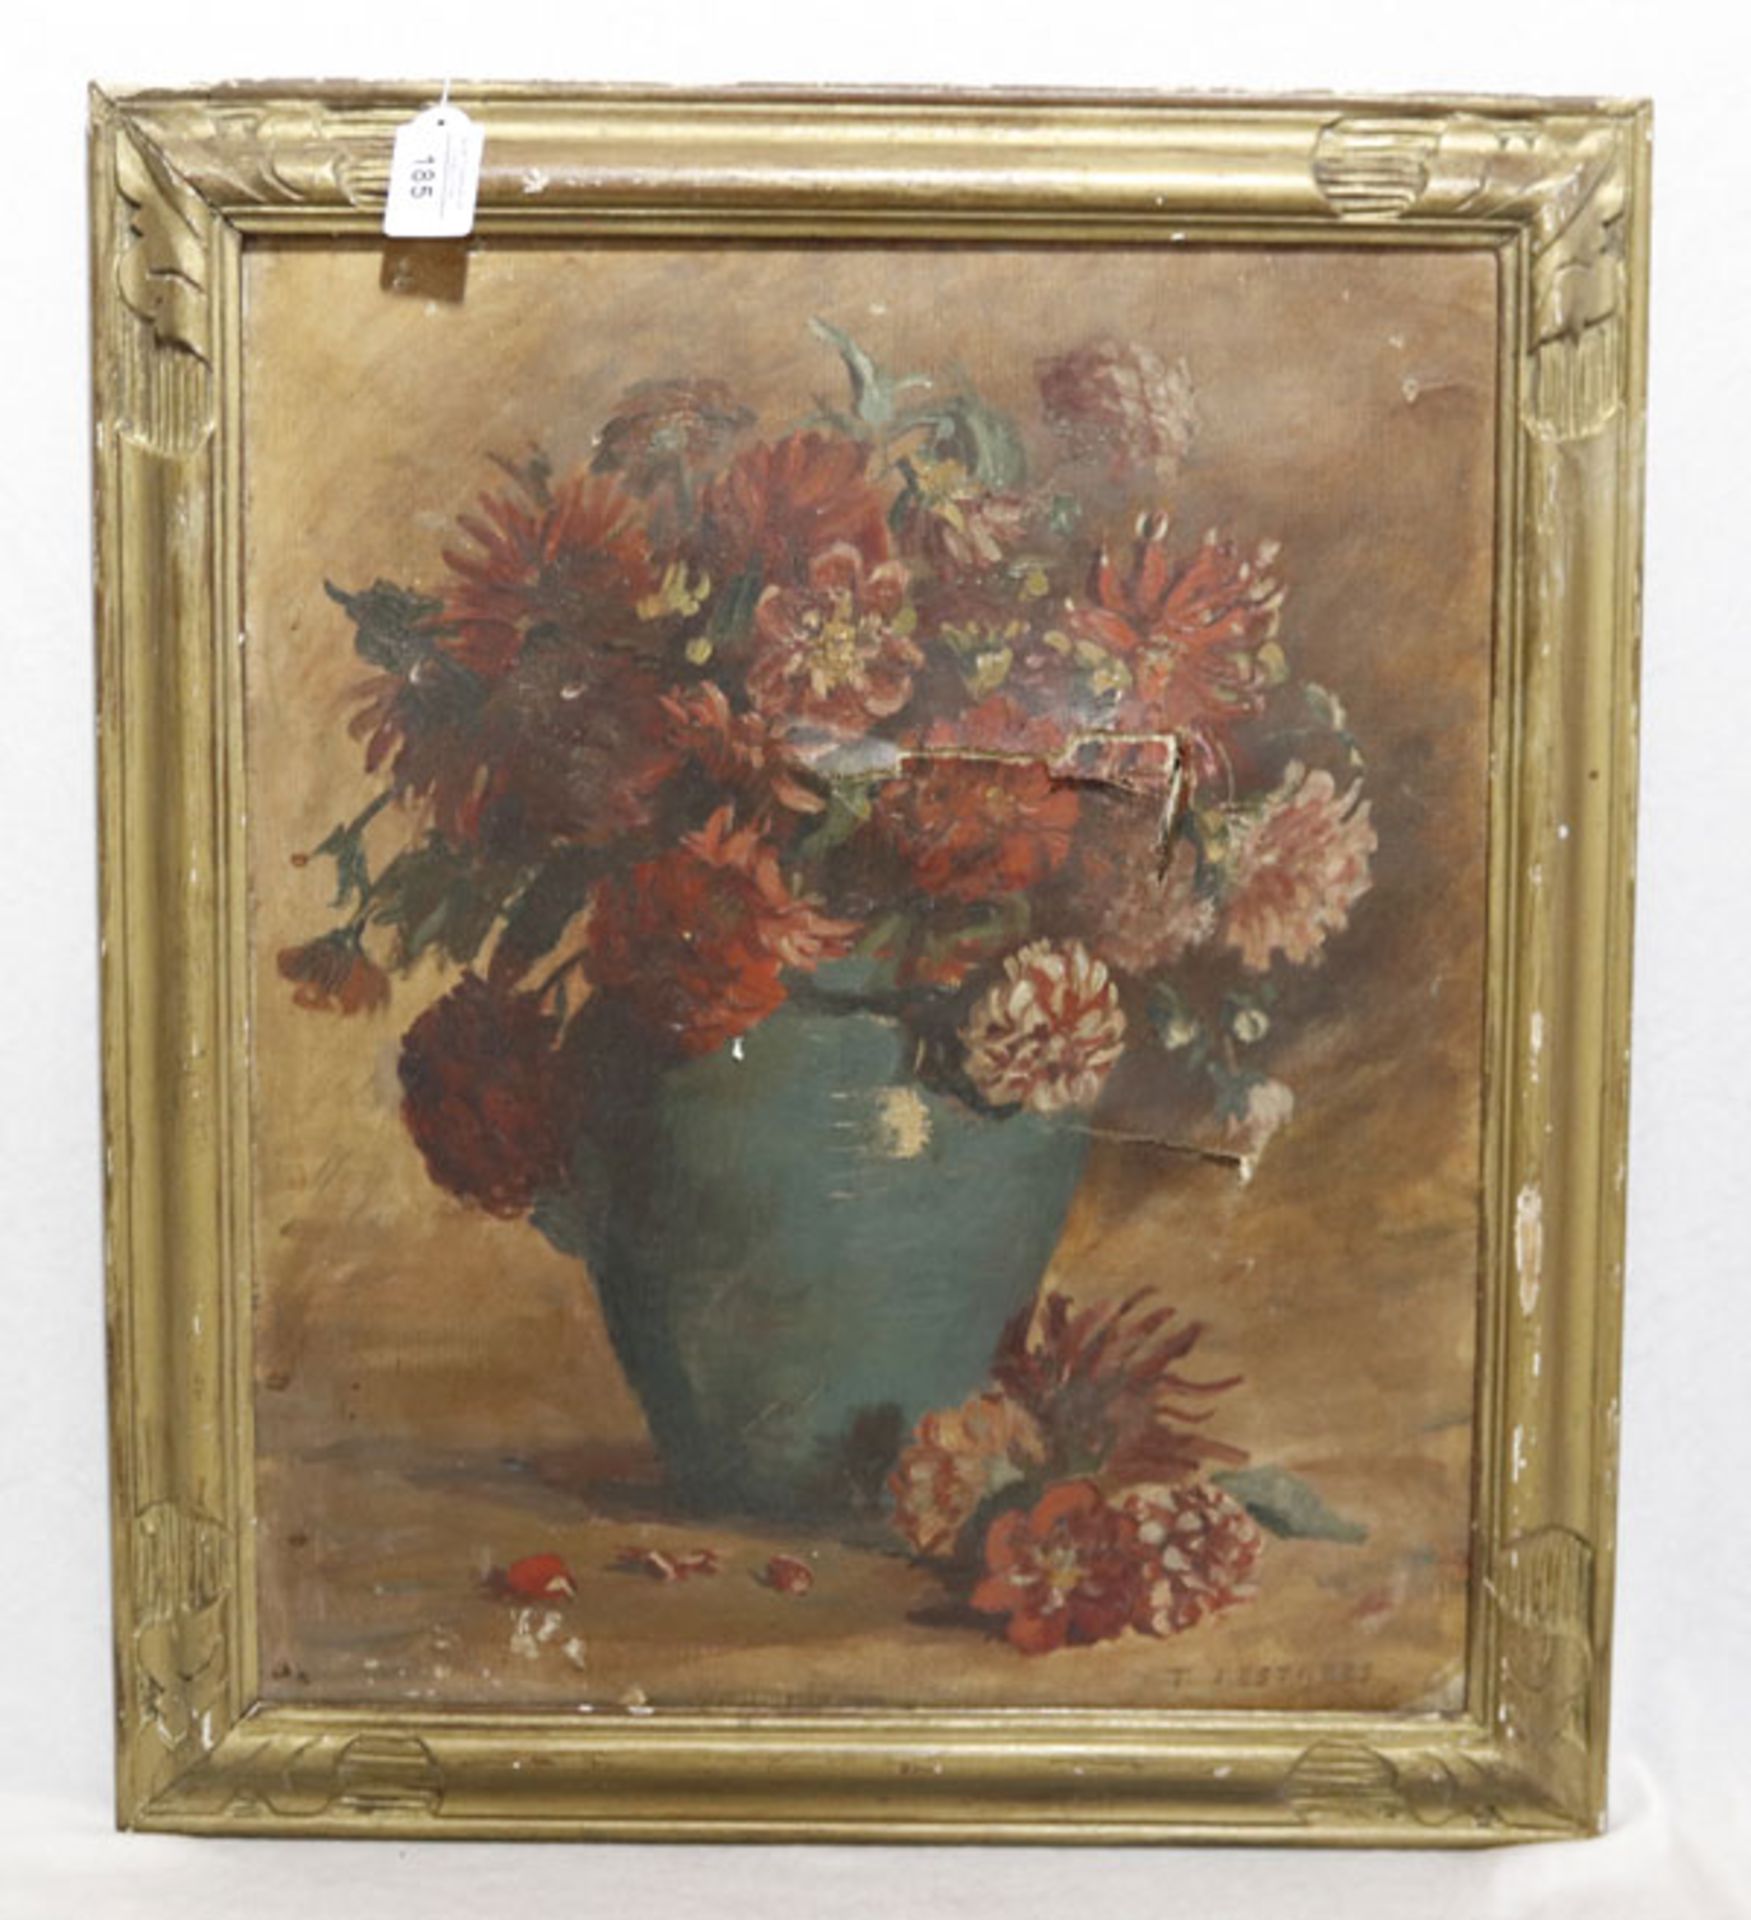 Gemälde ÖL/LW 'Dahlien in Vase', signiert Estrees, wohl Thérèse d' Estrees, * 1874 - ?, doubliert,